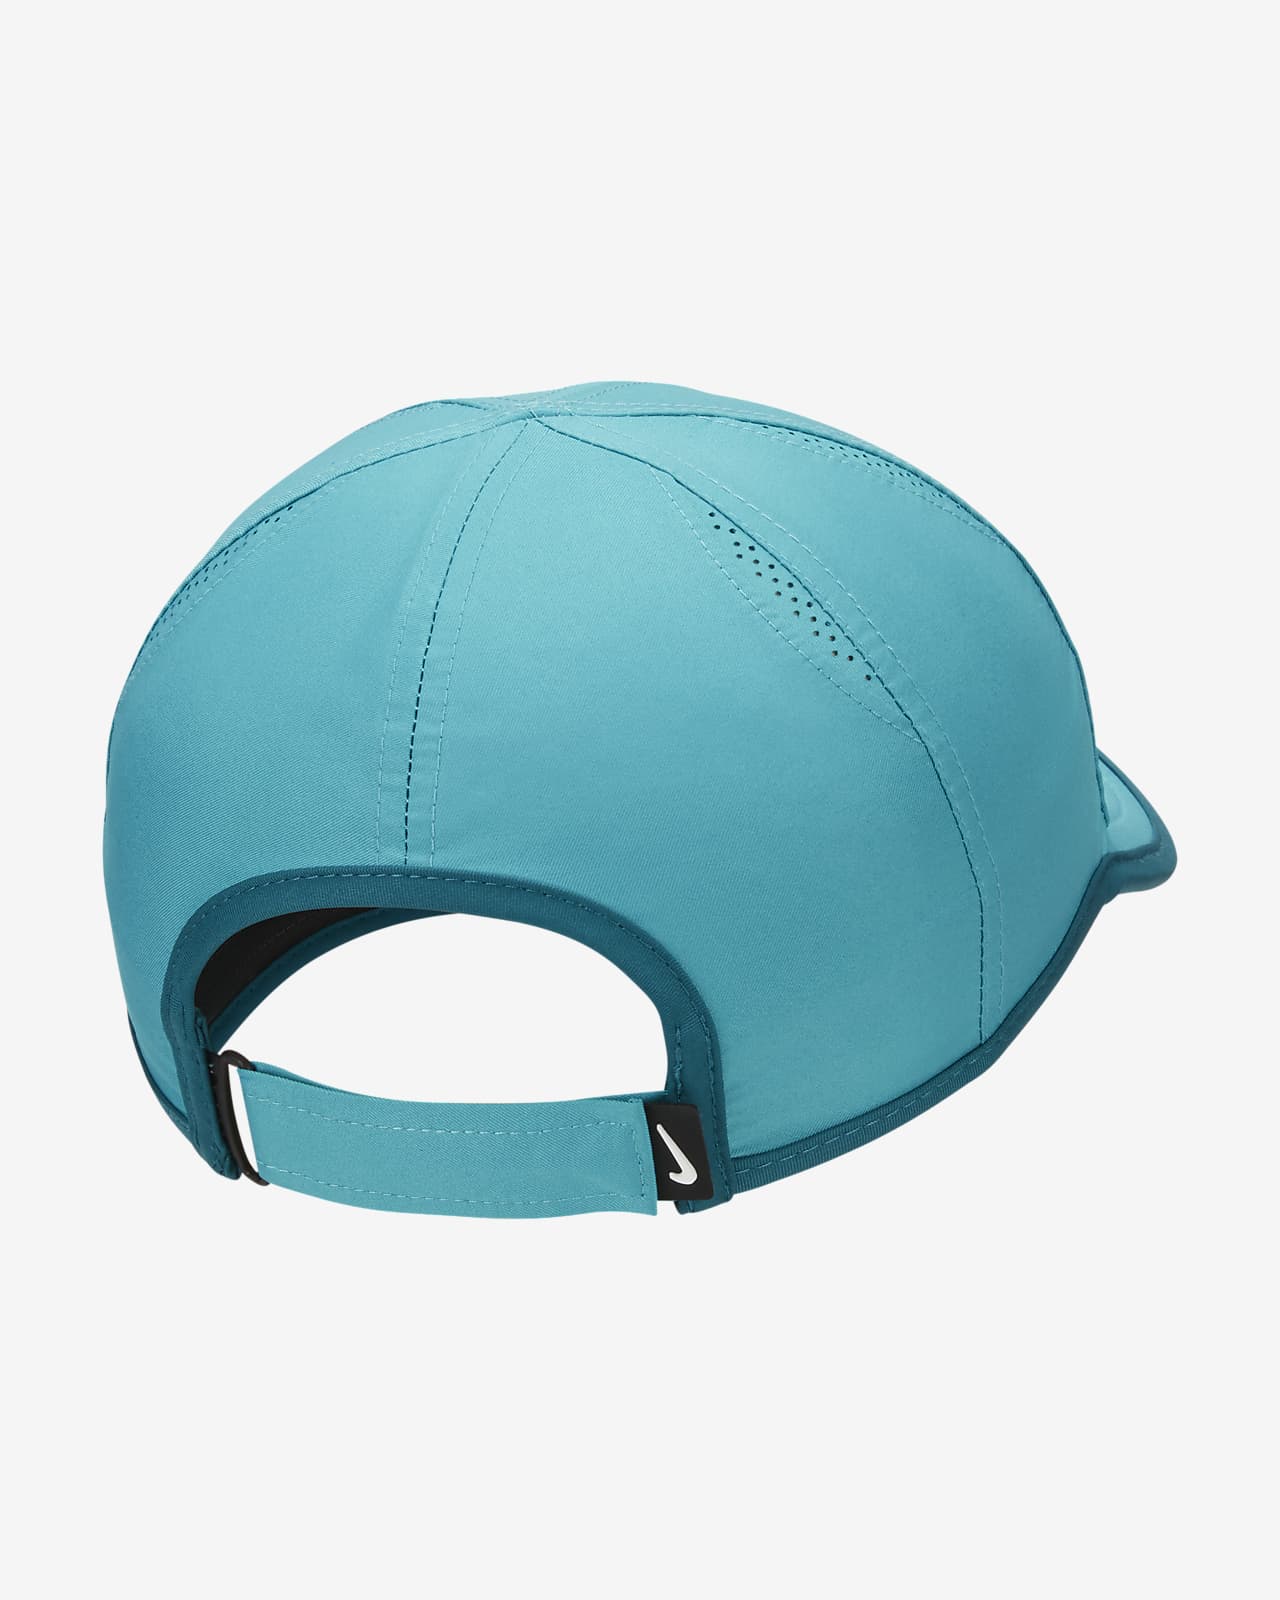 New Nike Feather Light Cap Hat Dri Fit Running Tennis Football 595510-531  Violet